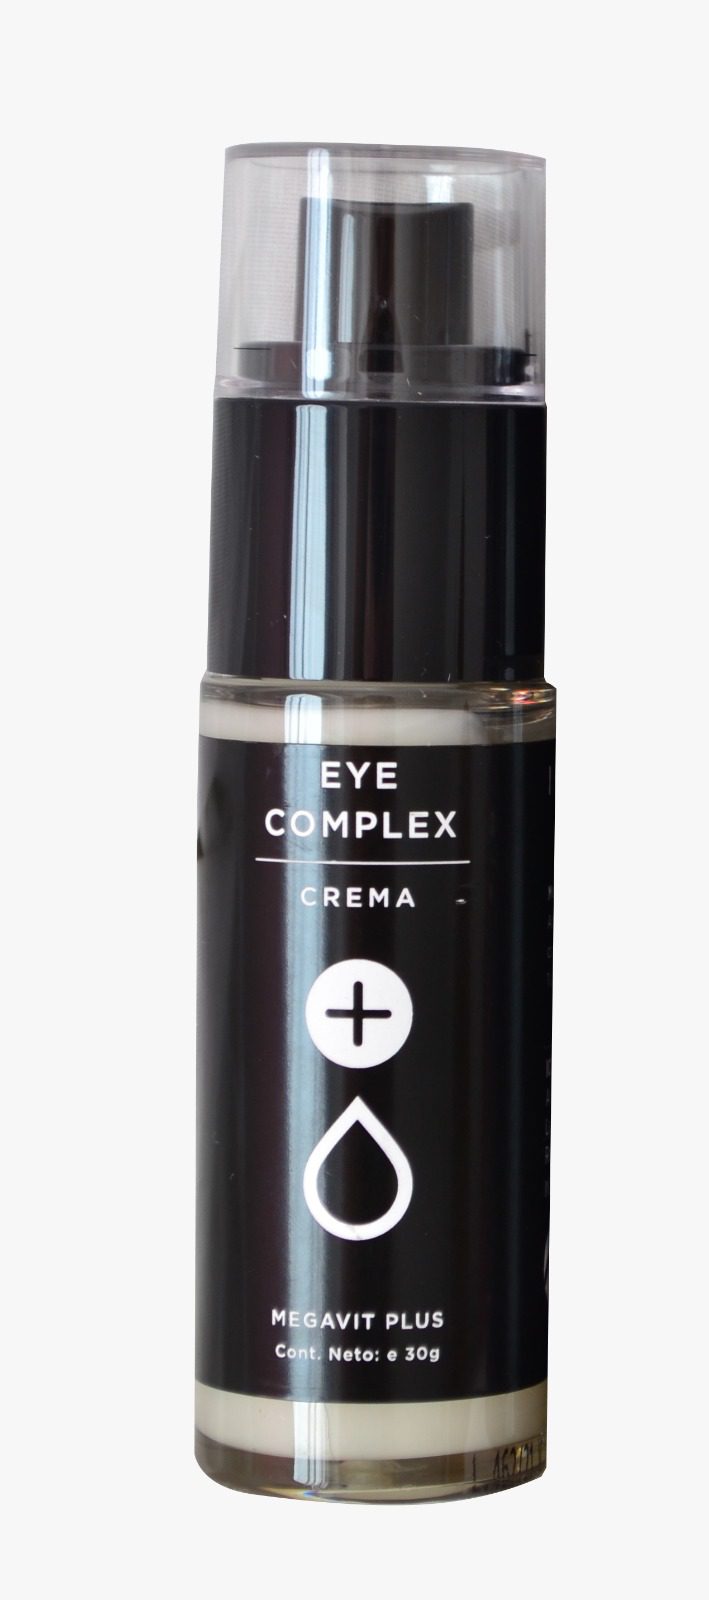 MEGAVIT PLUS Eye Complex Crema